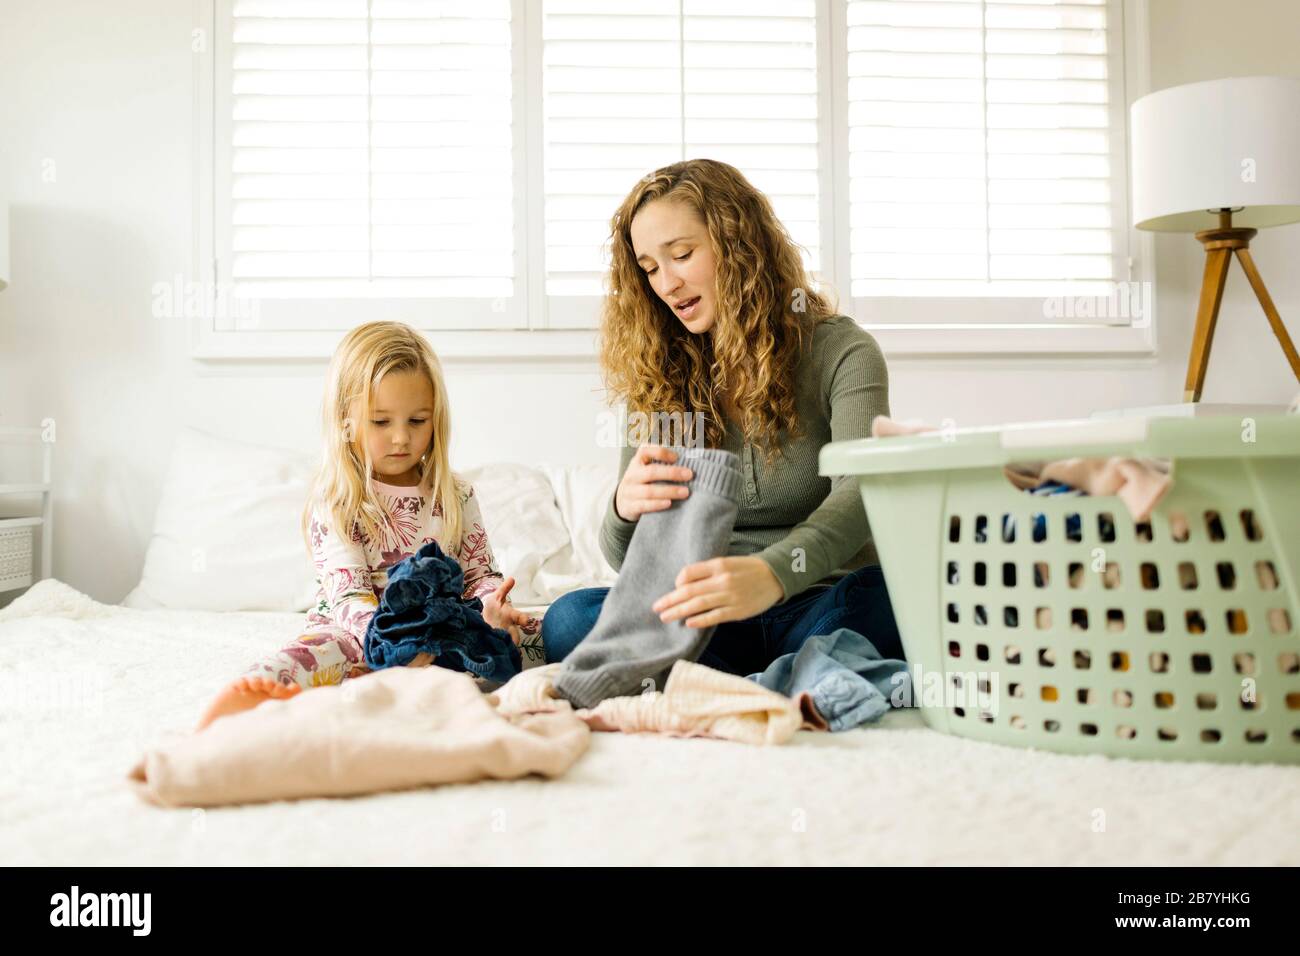 La madre y la hija doblan la ropa en la cama Foto de stock